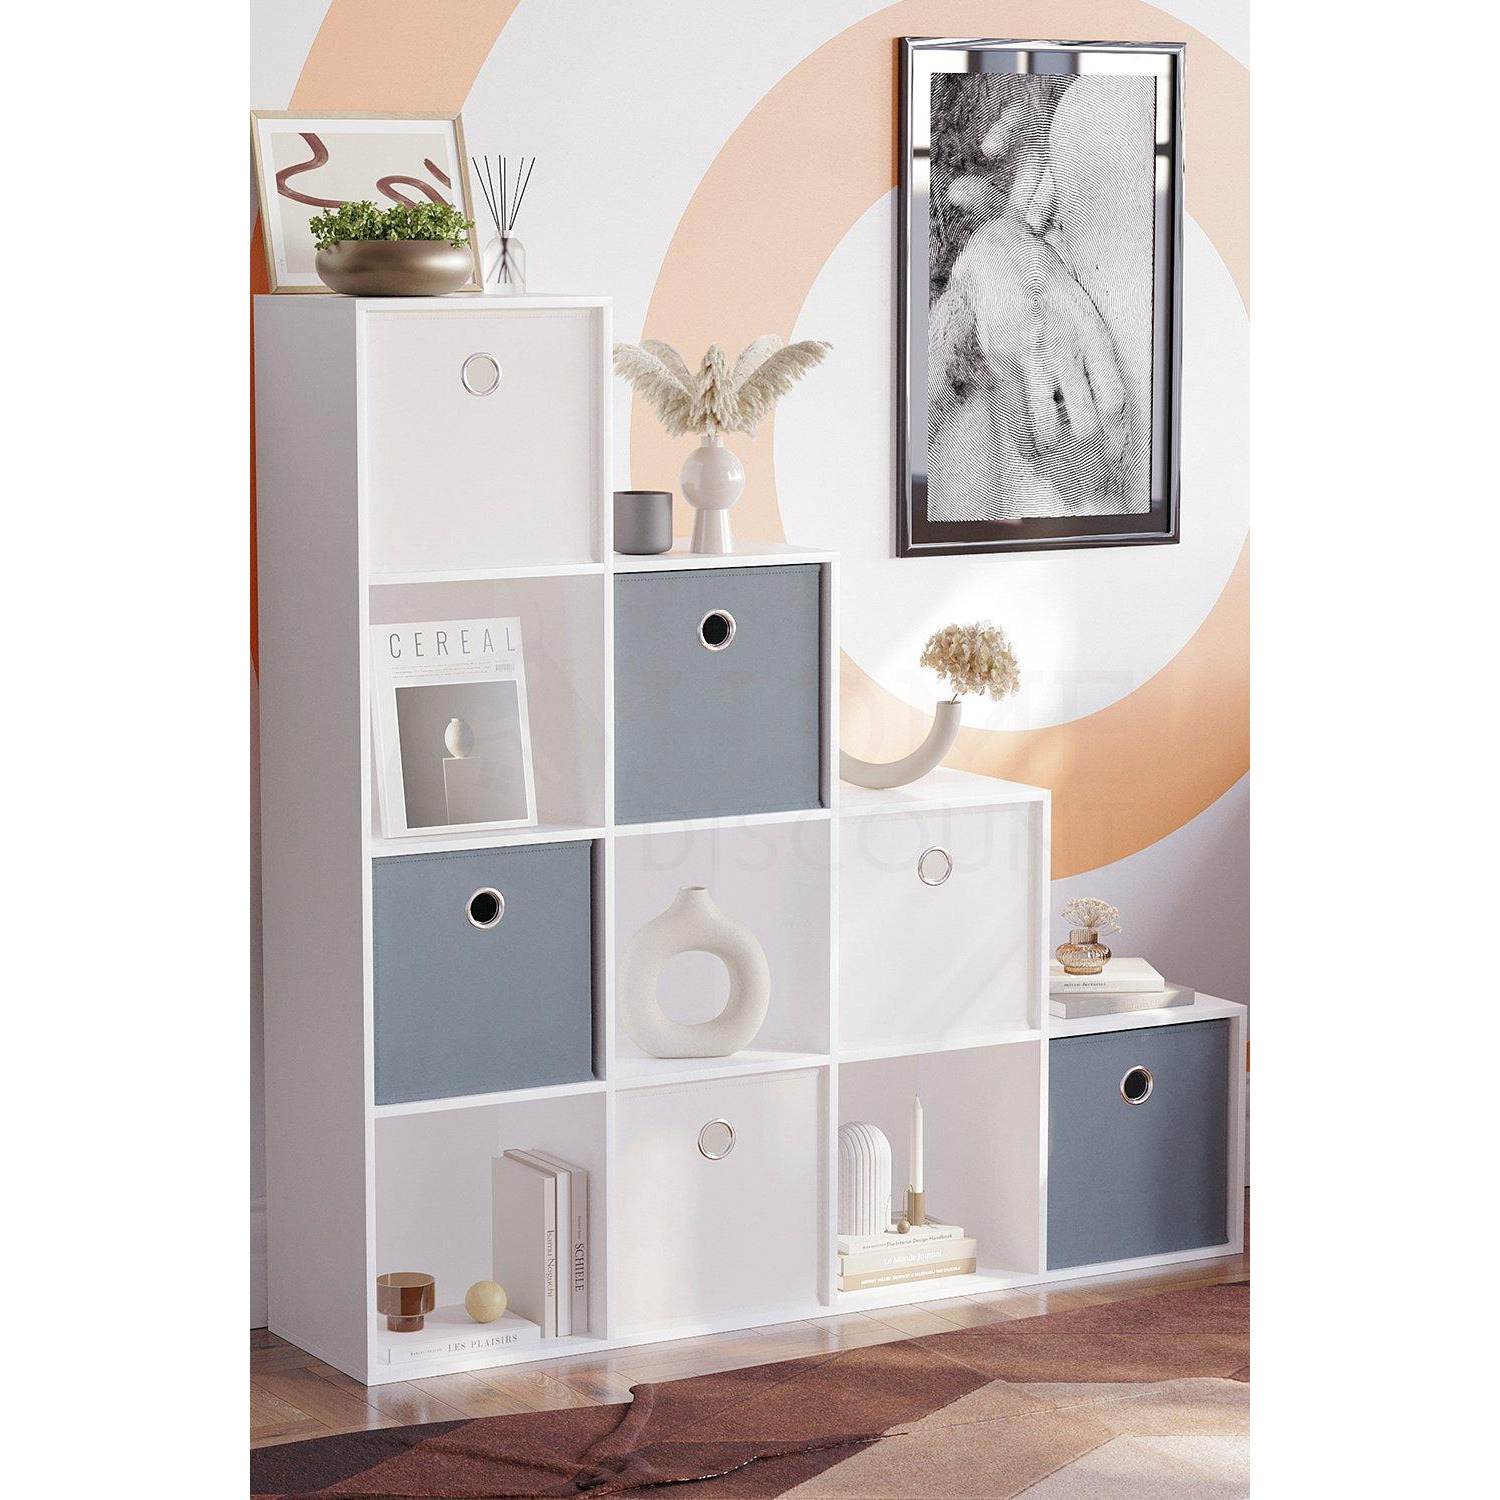 Vida Designs Durham 10 Cube Staircase Bookcase Storage Unit 1280 x 1280 x 290 mm - image 1